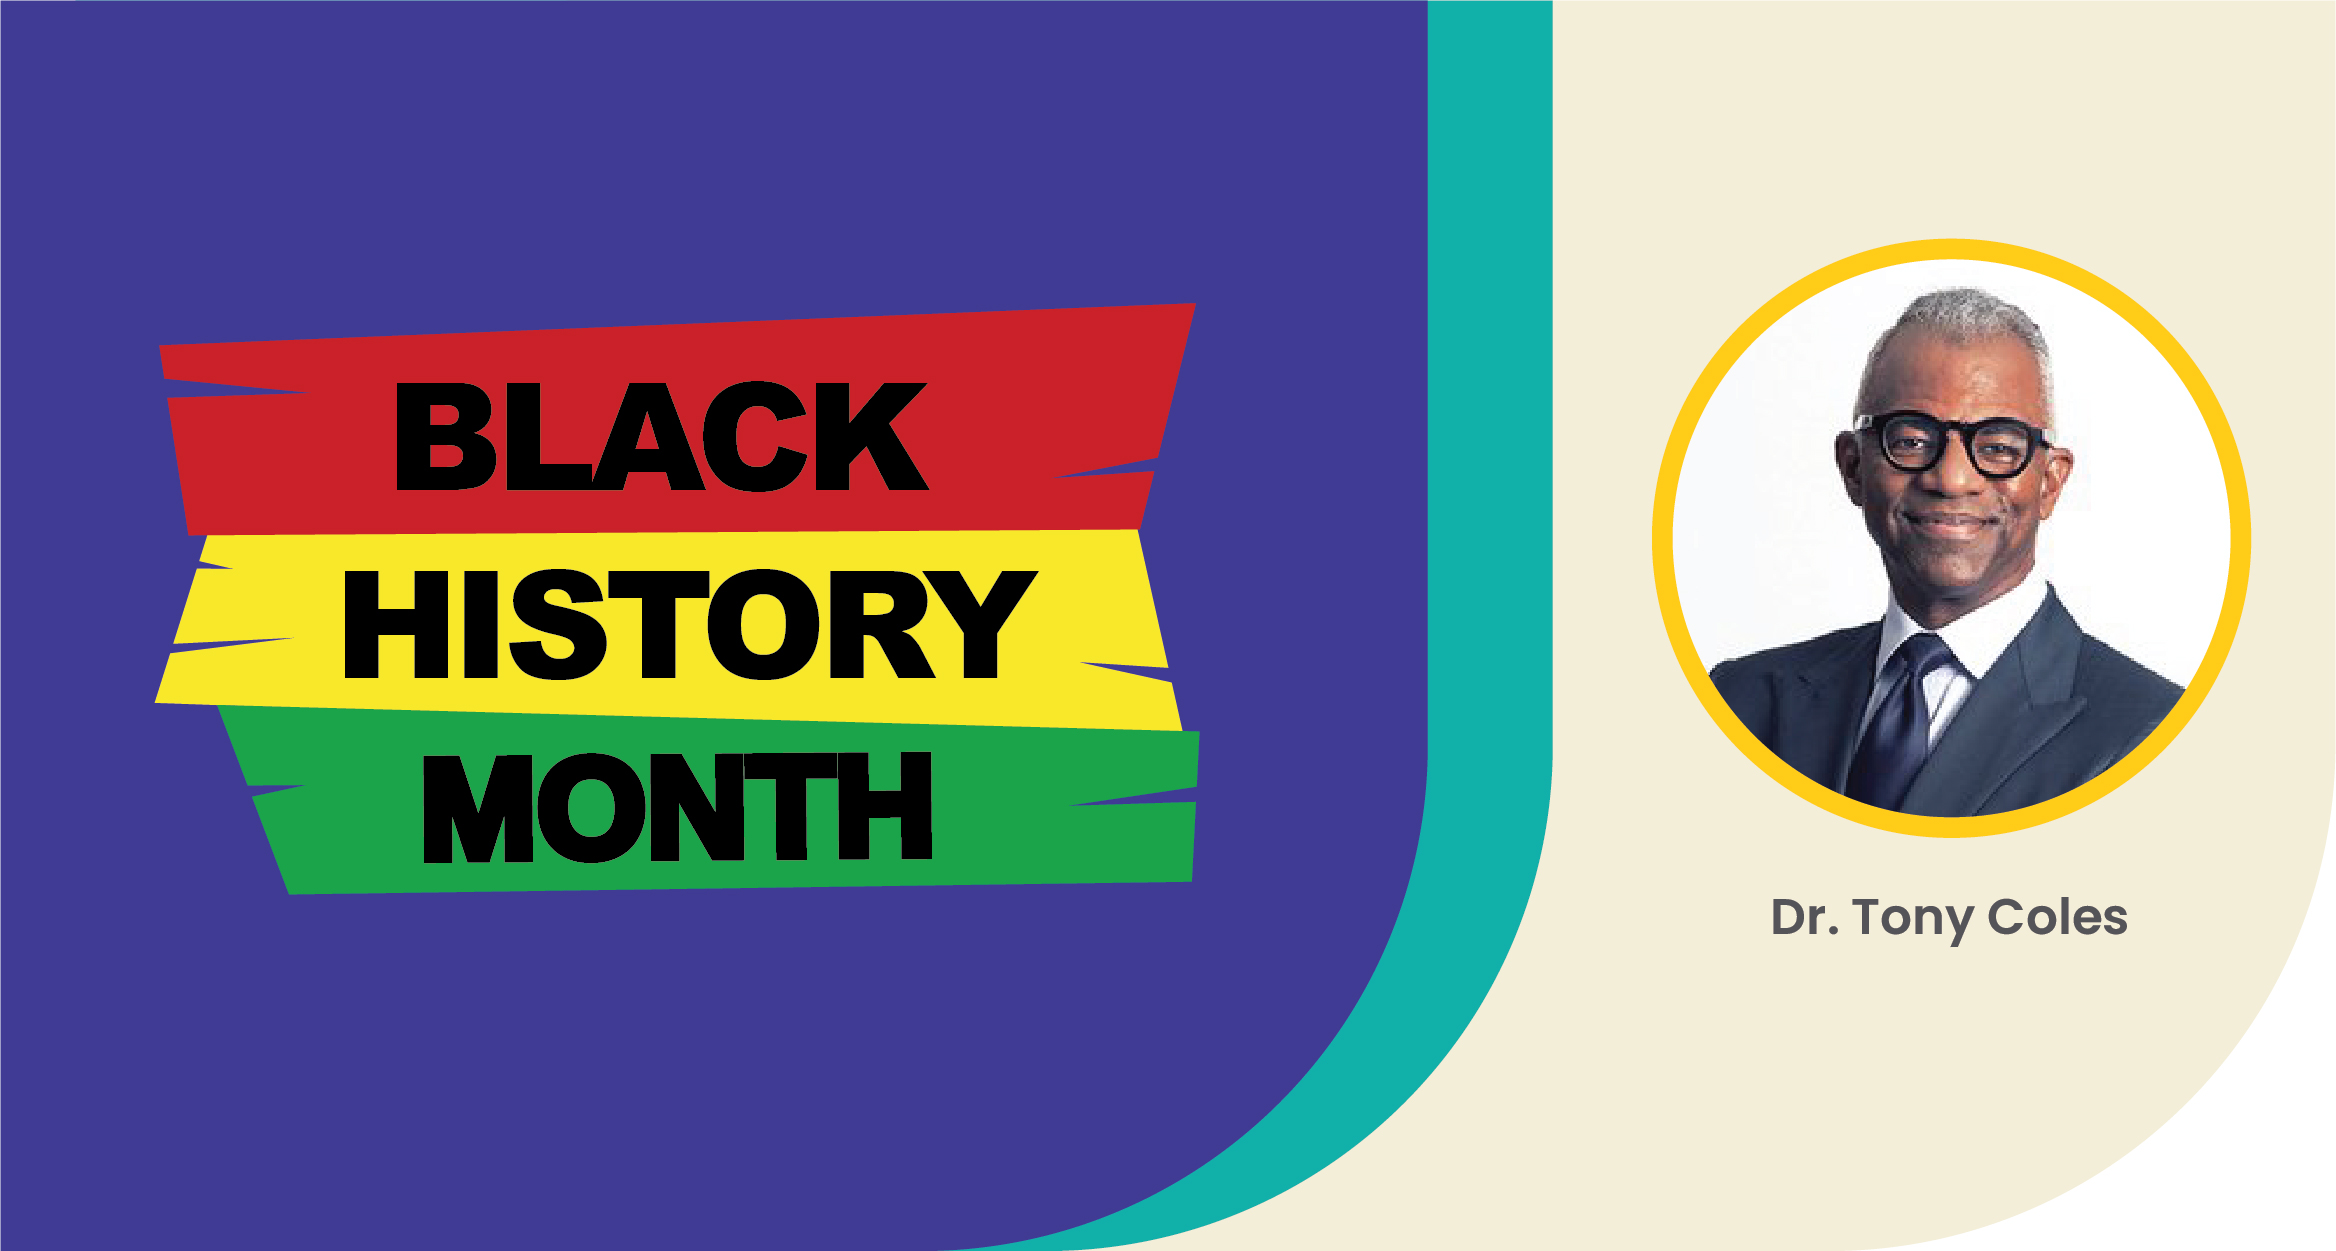 Black History Month: Dr. Tony Coles